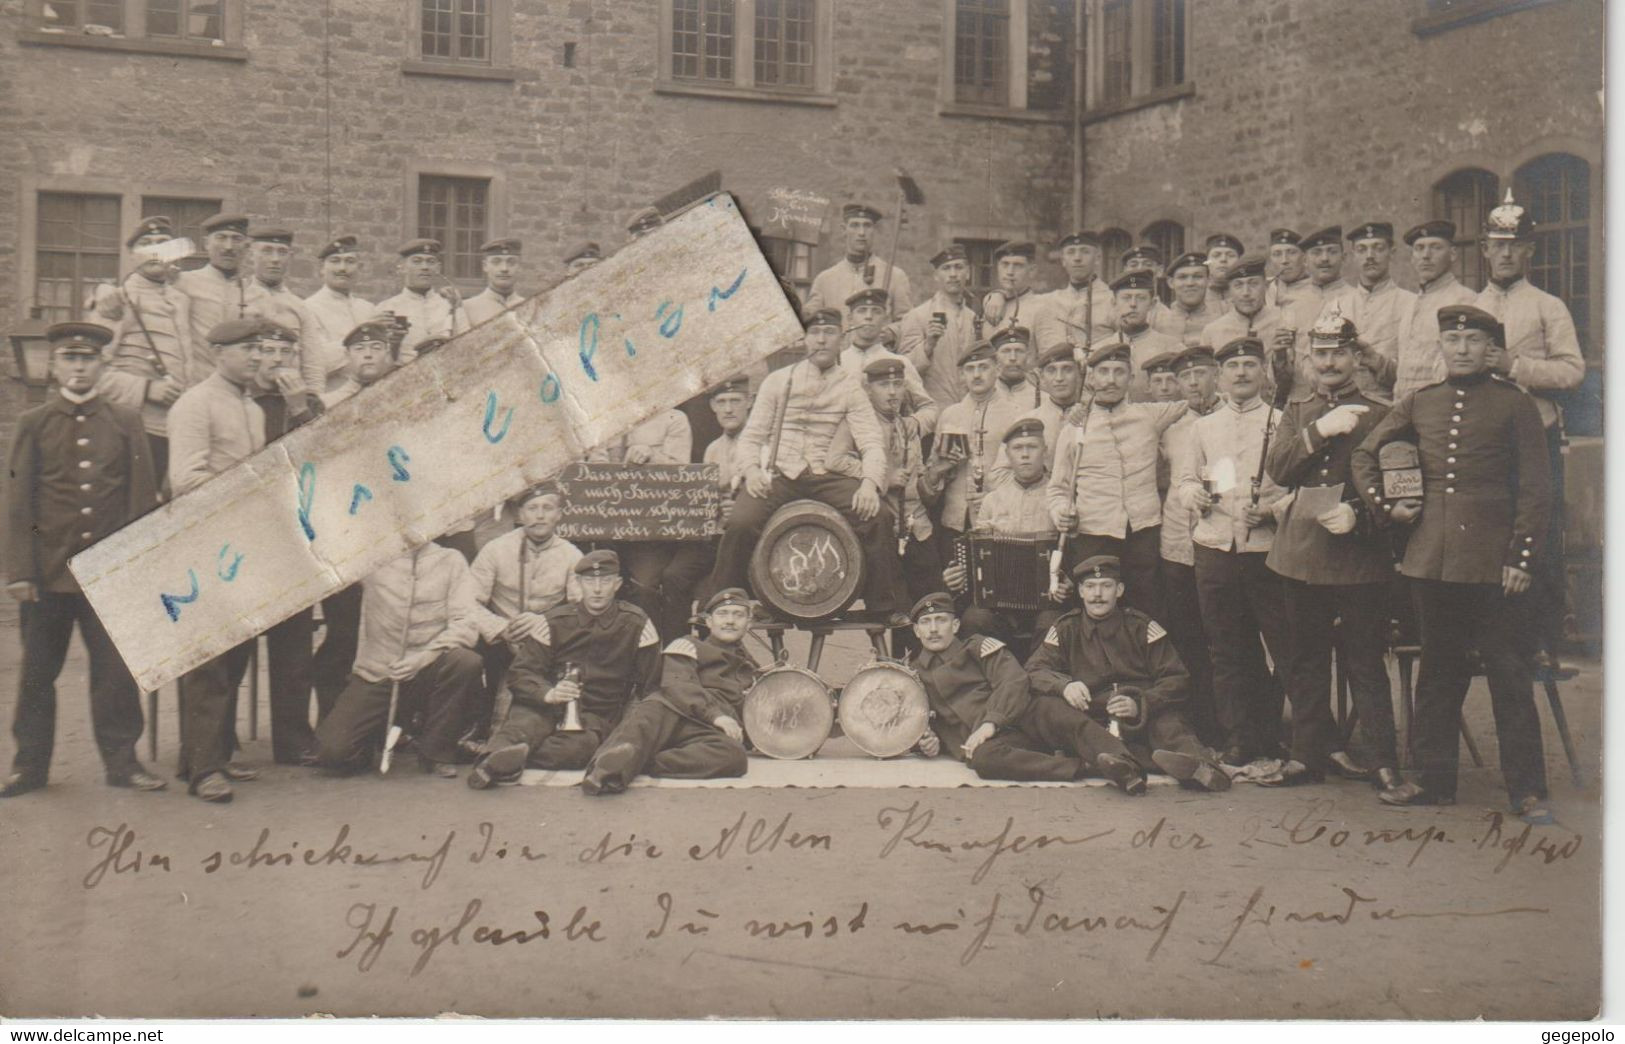 RASTATT - Des Militaires " Grenadiers " ? Qui Posent En 1911  ( Carte Photo ) - Rastatt